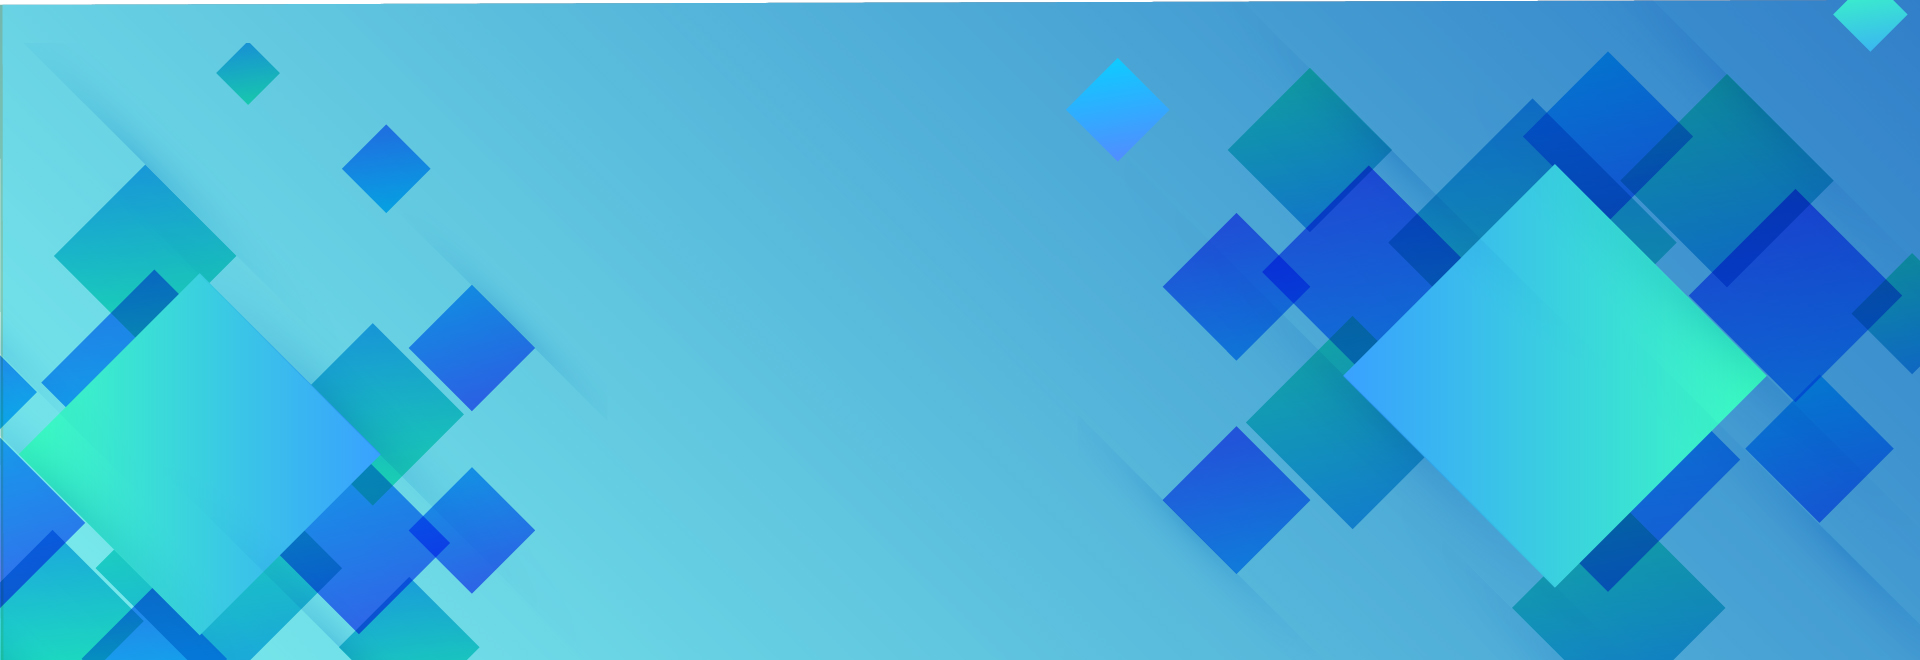 Blue blog banner with quadratic design